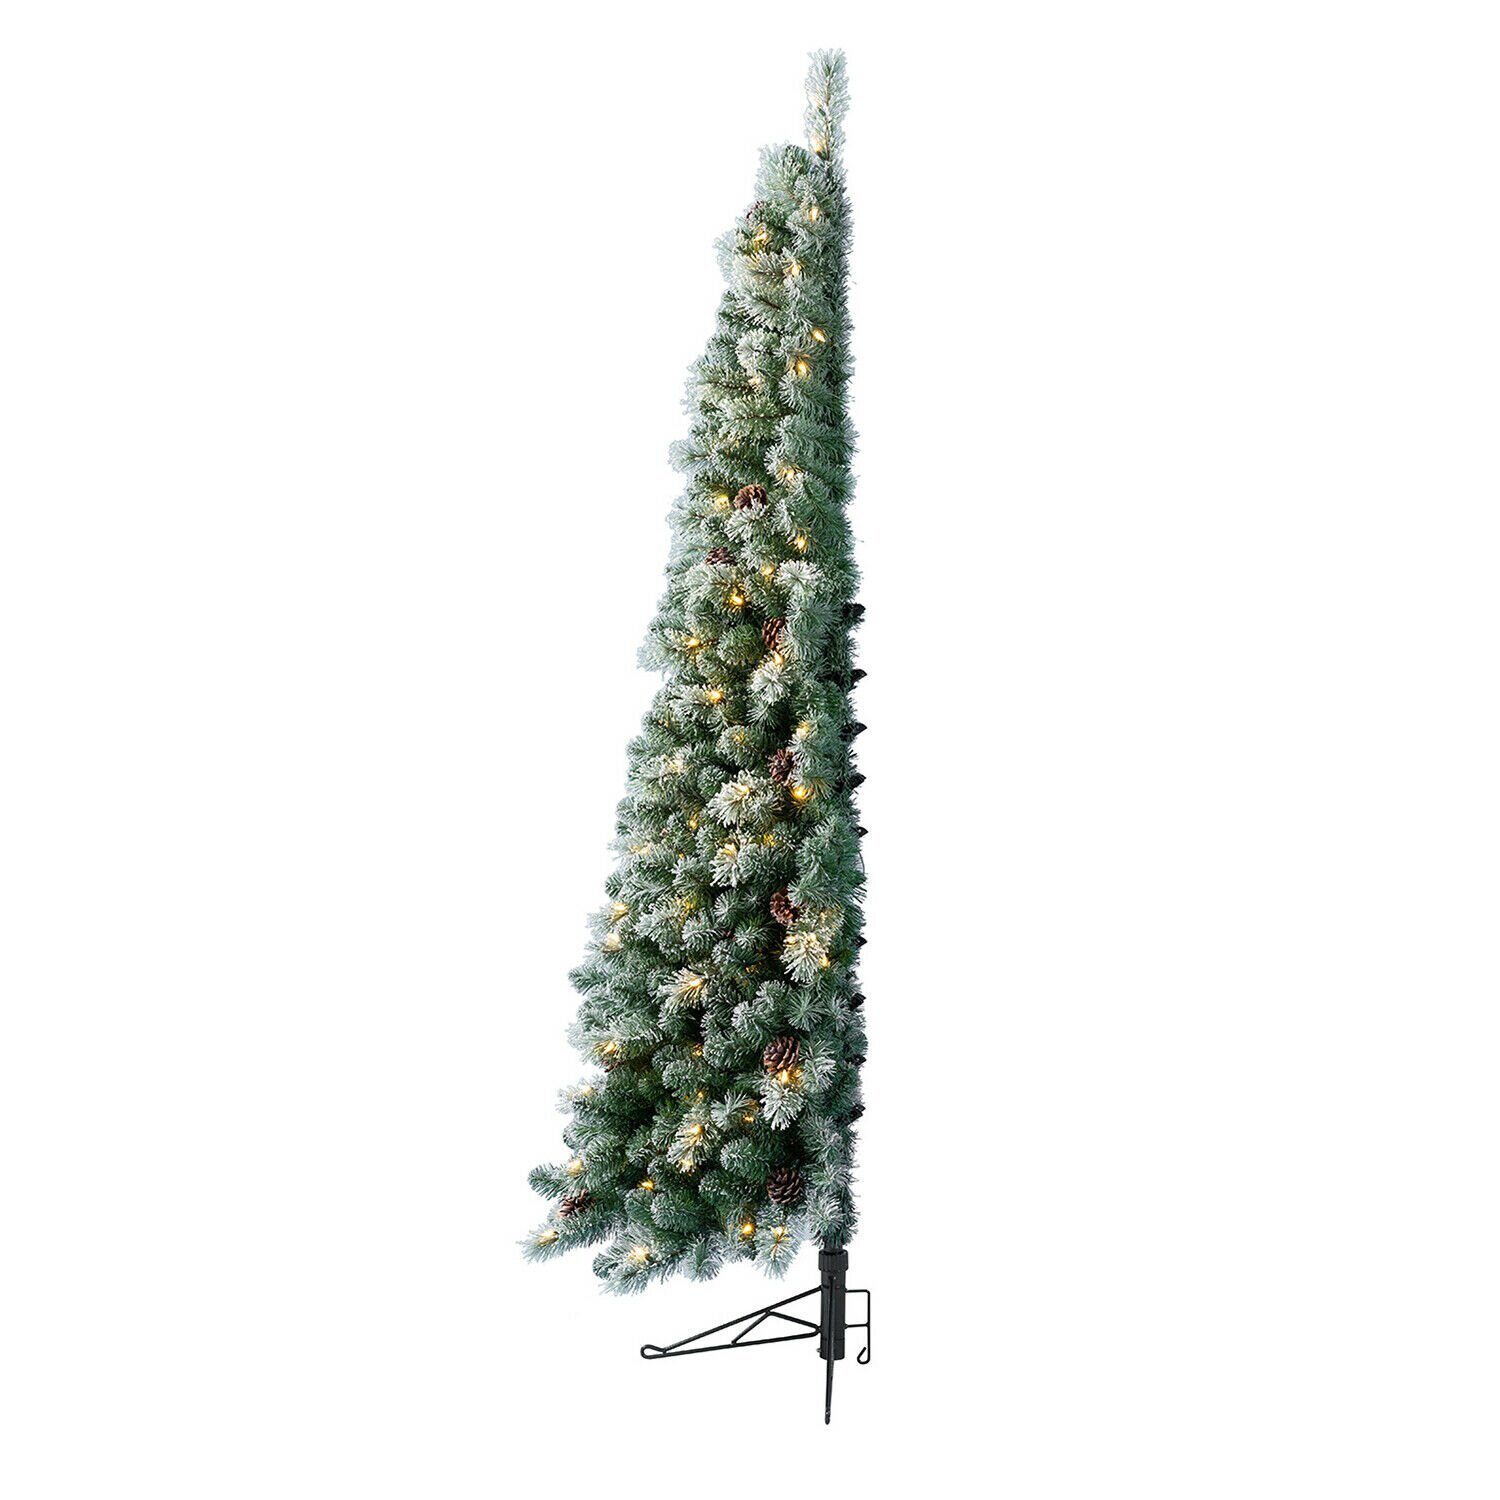 Tall flat back Christmas tree